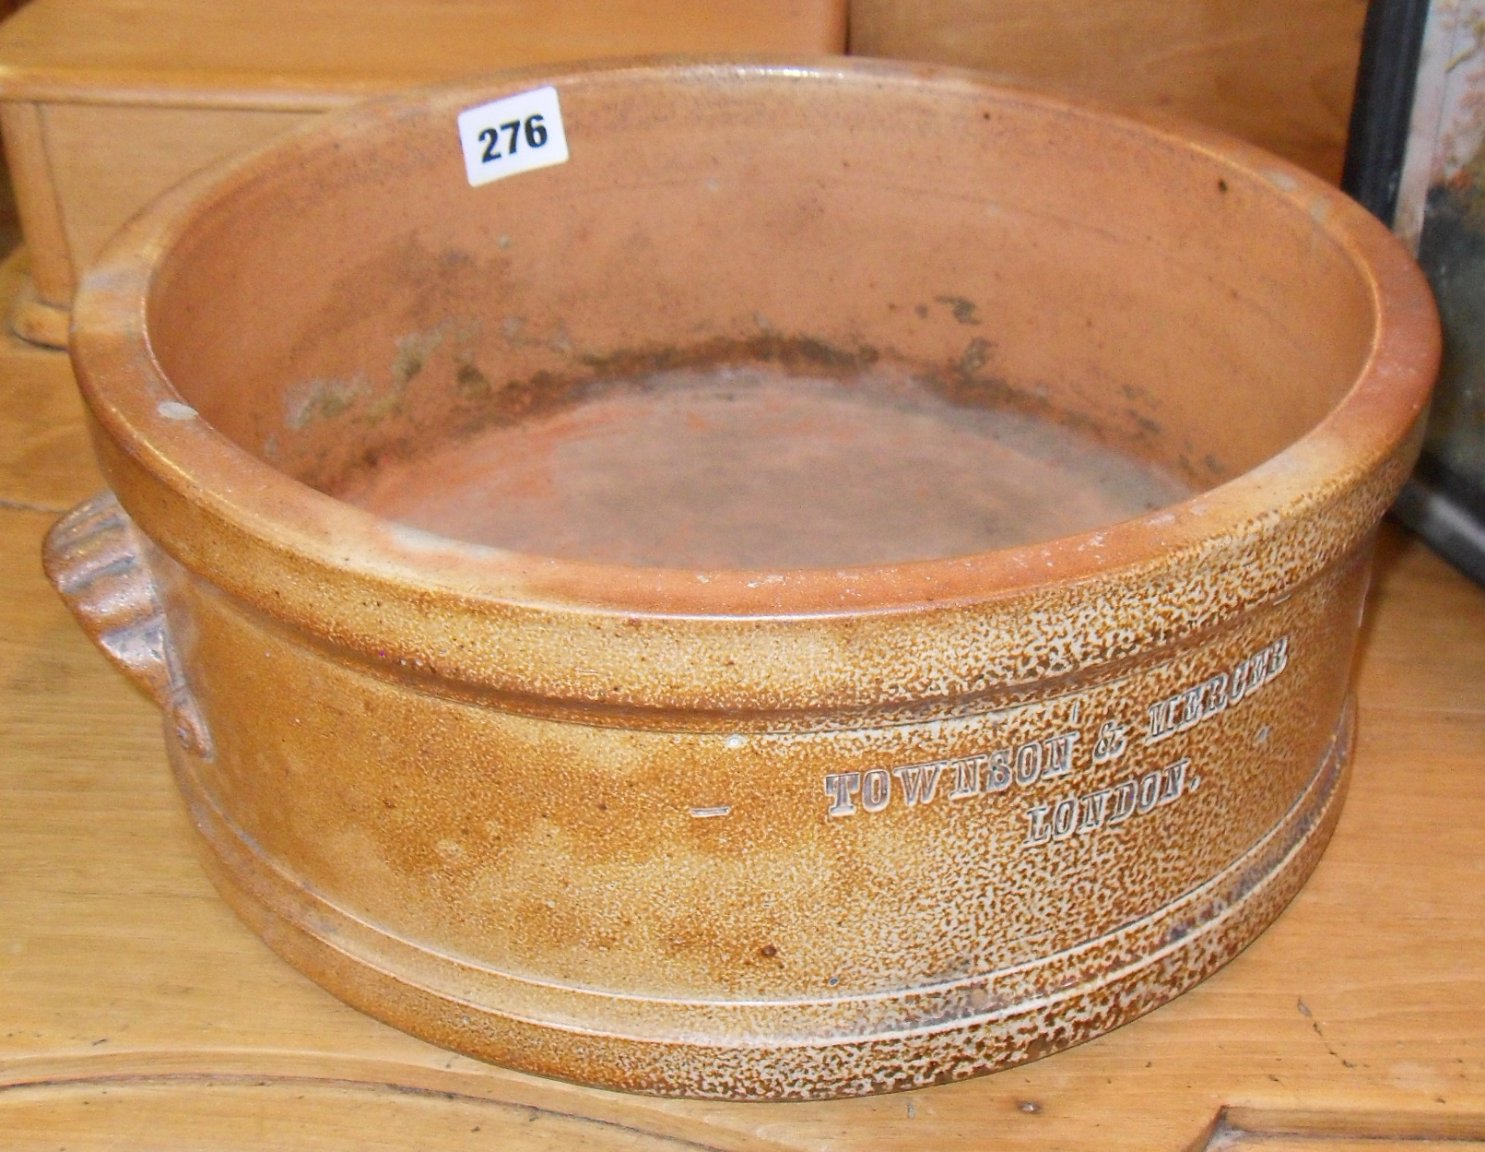 Lambeth salt-glazed stoneware planter with impressed name of Townson & Mercer, London